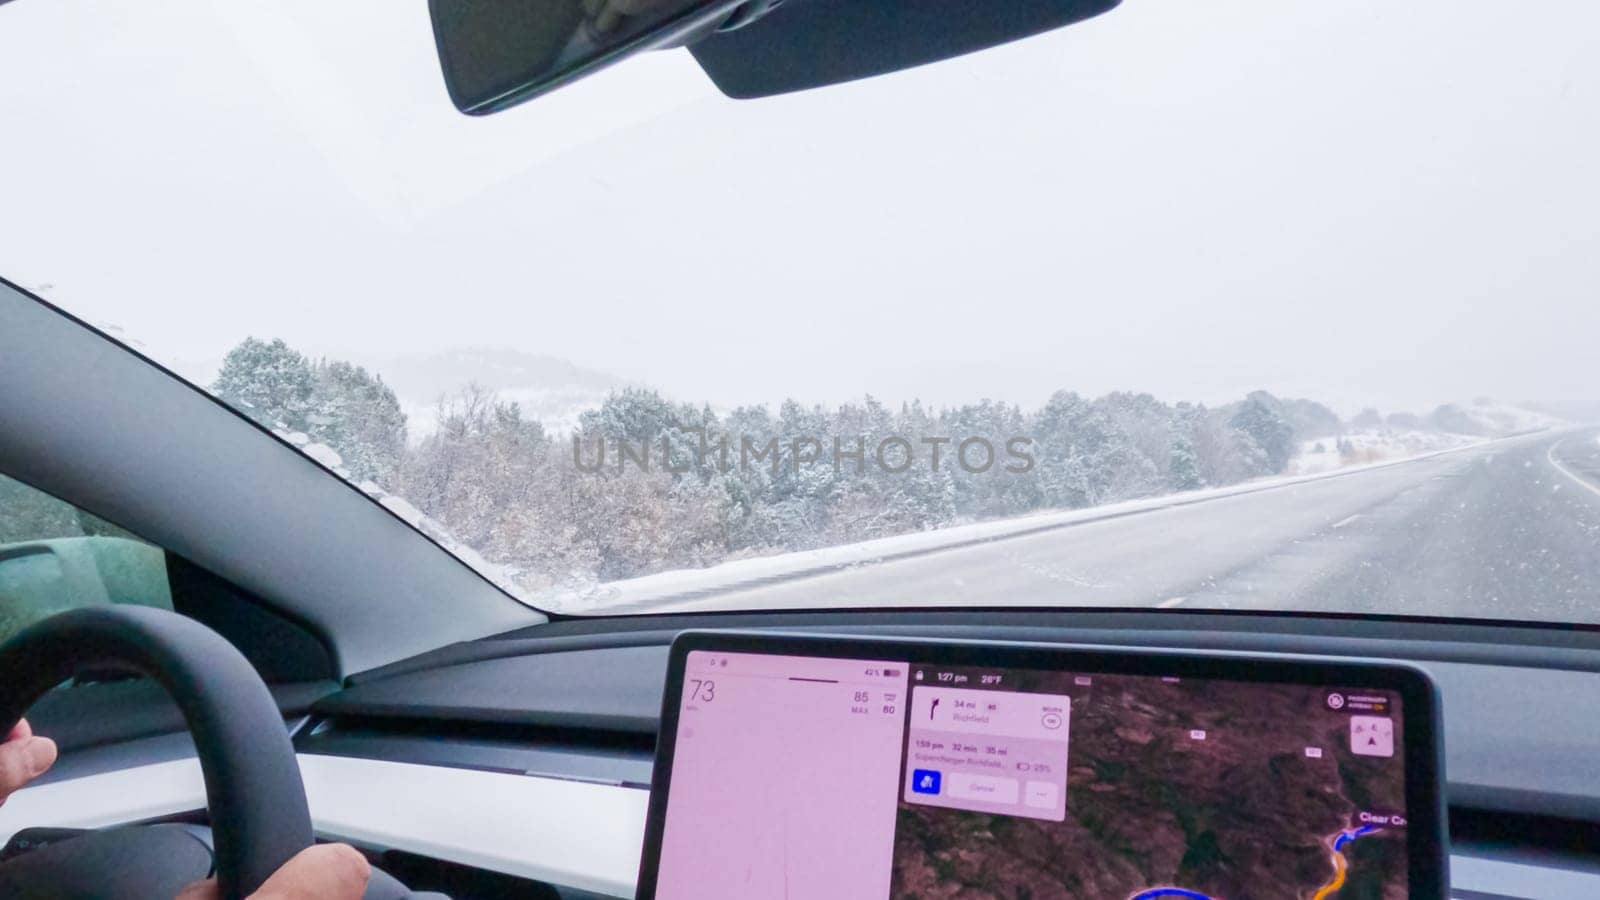 Denver, Colorado, USA-December 7, 2022--POV-In a Tesla electric car, a driver adeptly navigates through Western Colorado's snowy landscapes during a winter storm.